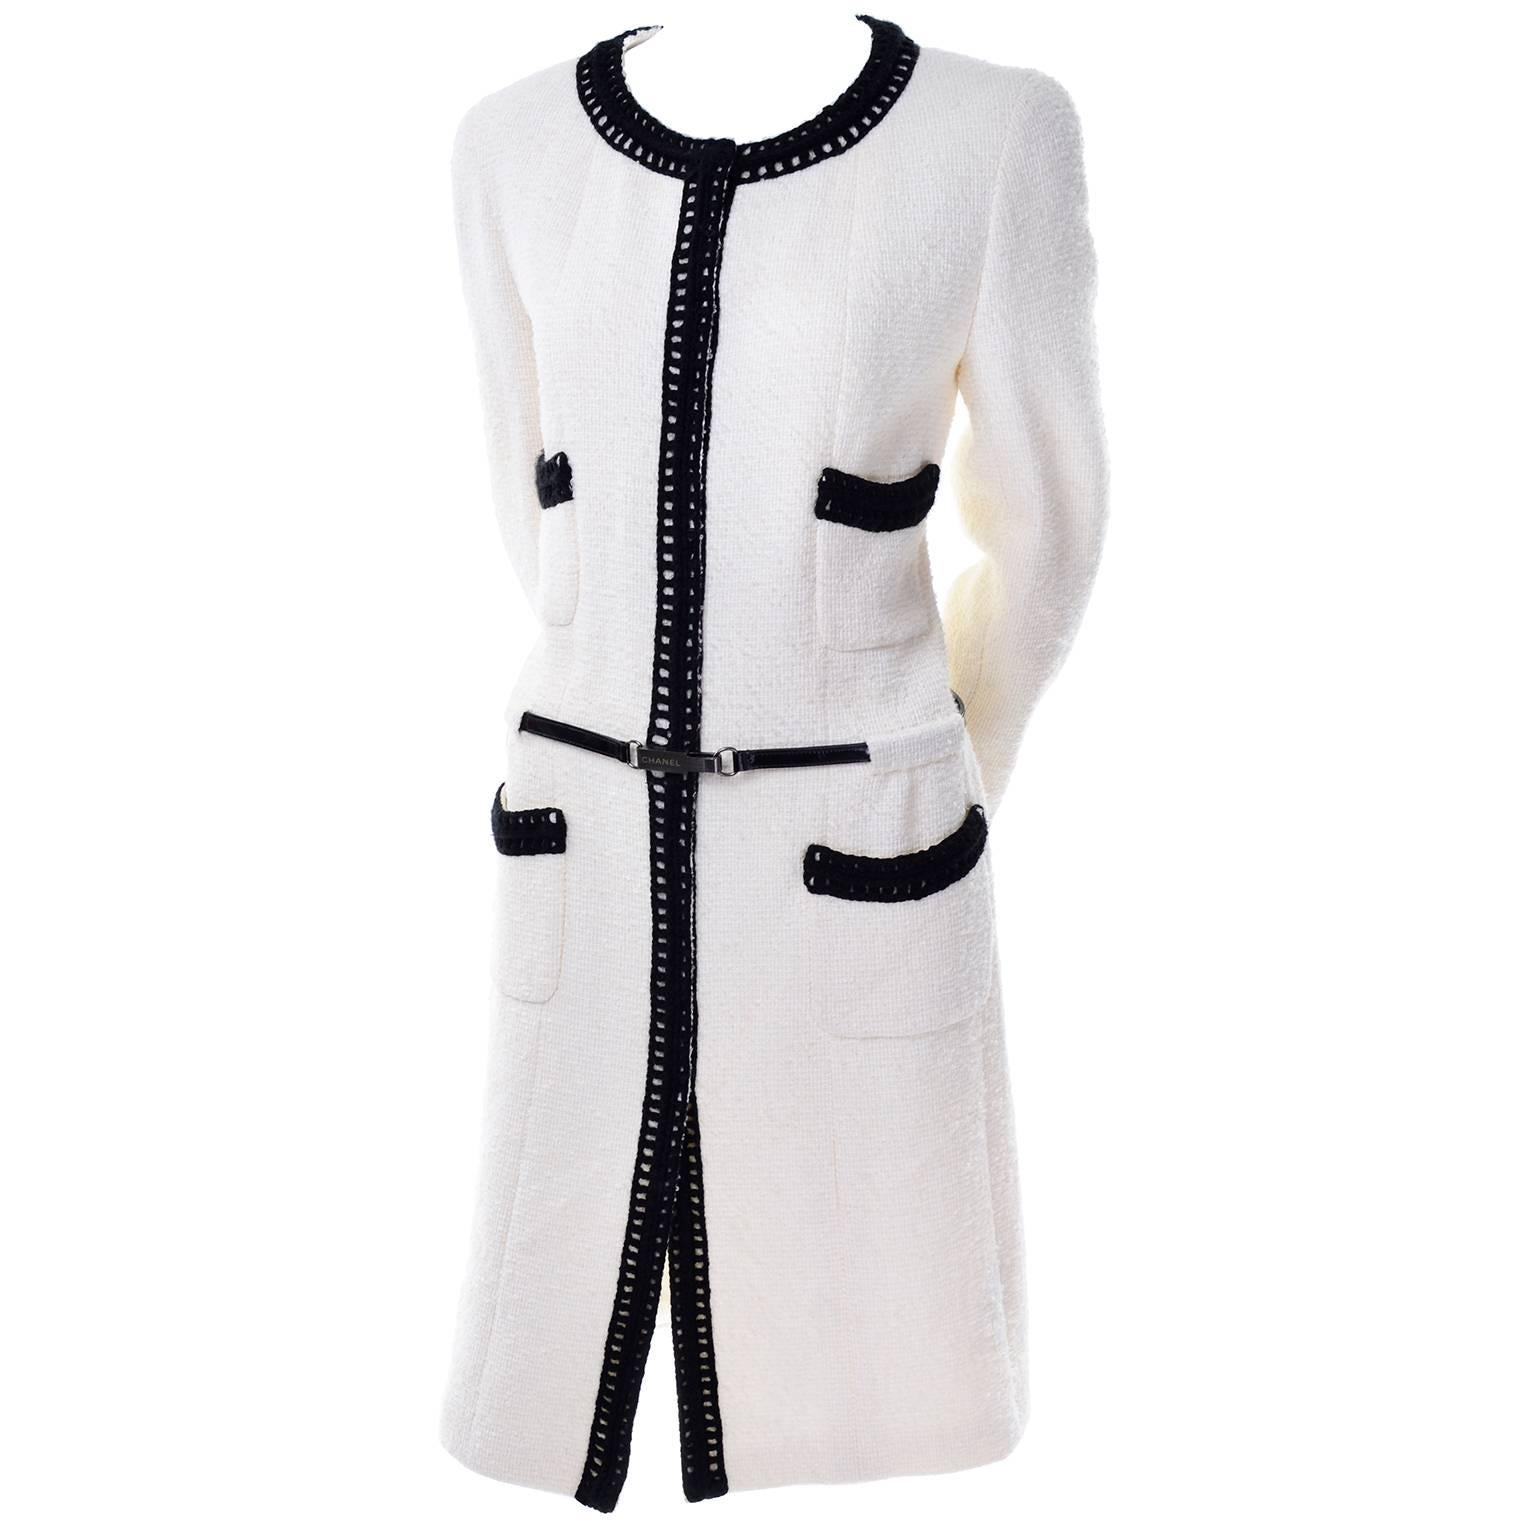 Chanel 2000 Documented White Tweed Coat Black Trim Kyoto Costume Institute 8/10